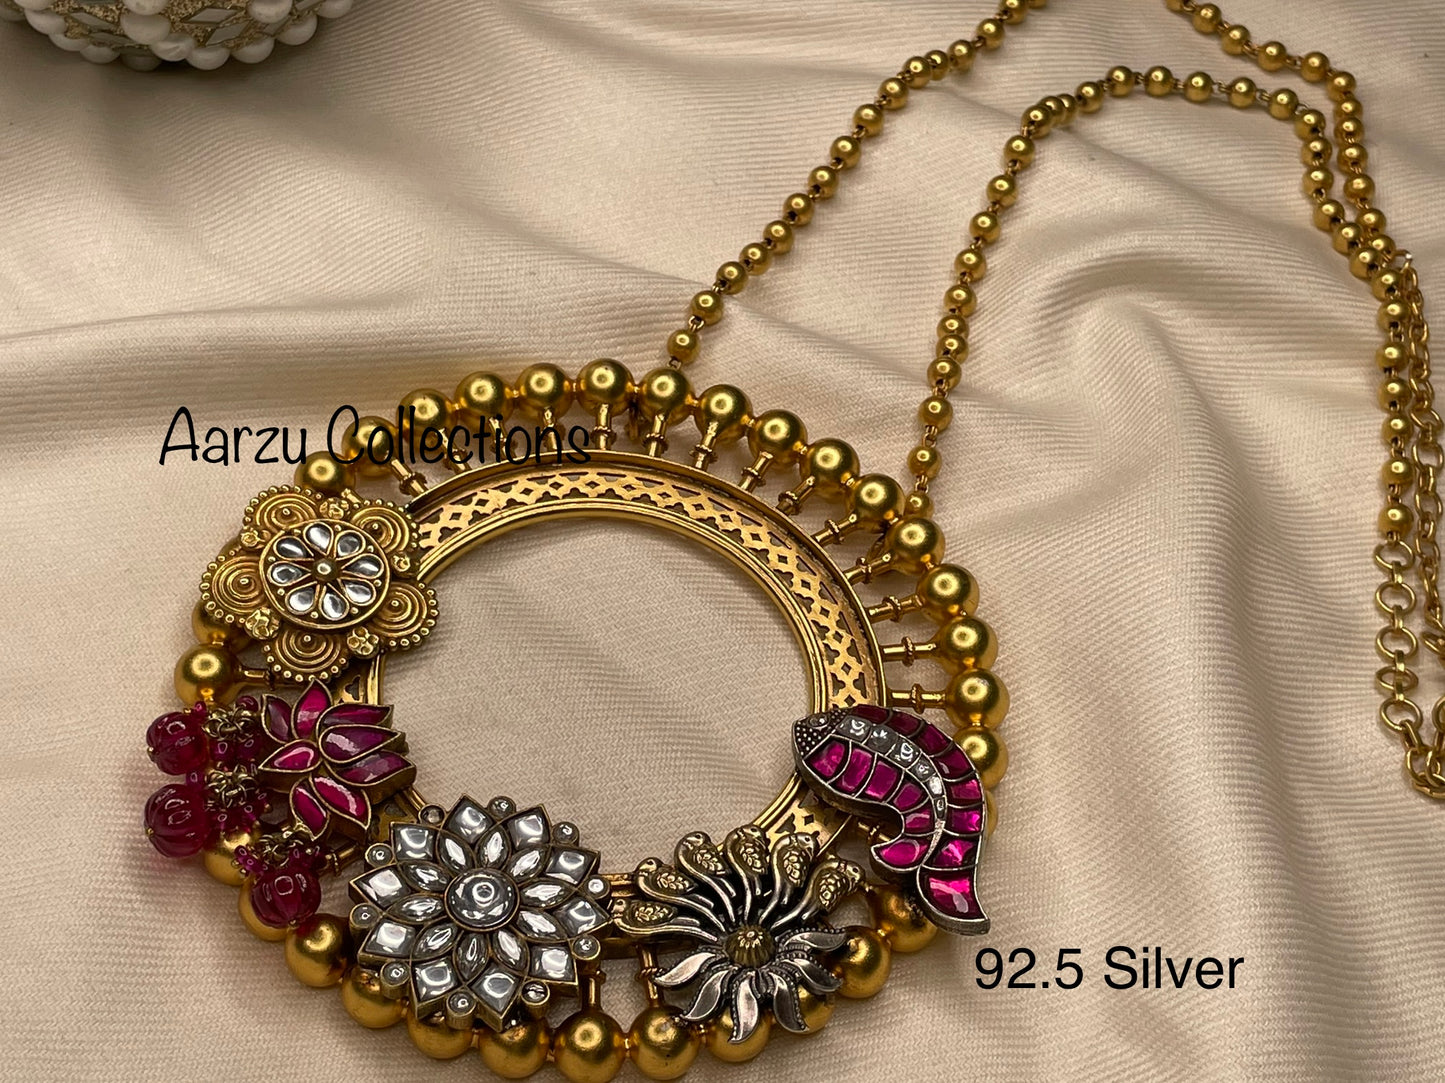 92.5 Silver Necklace